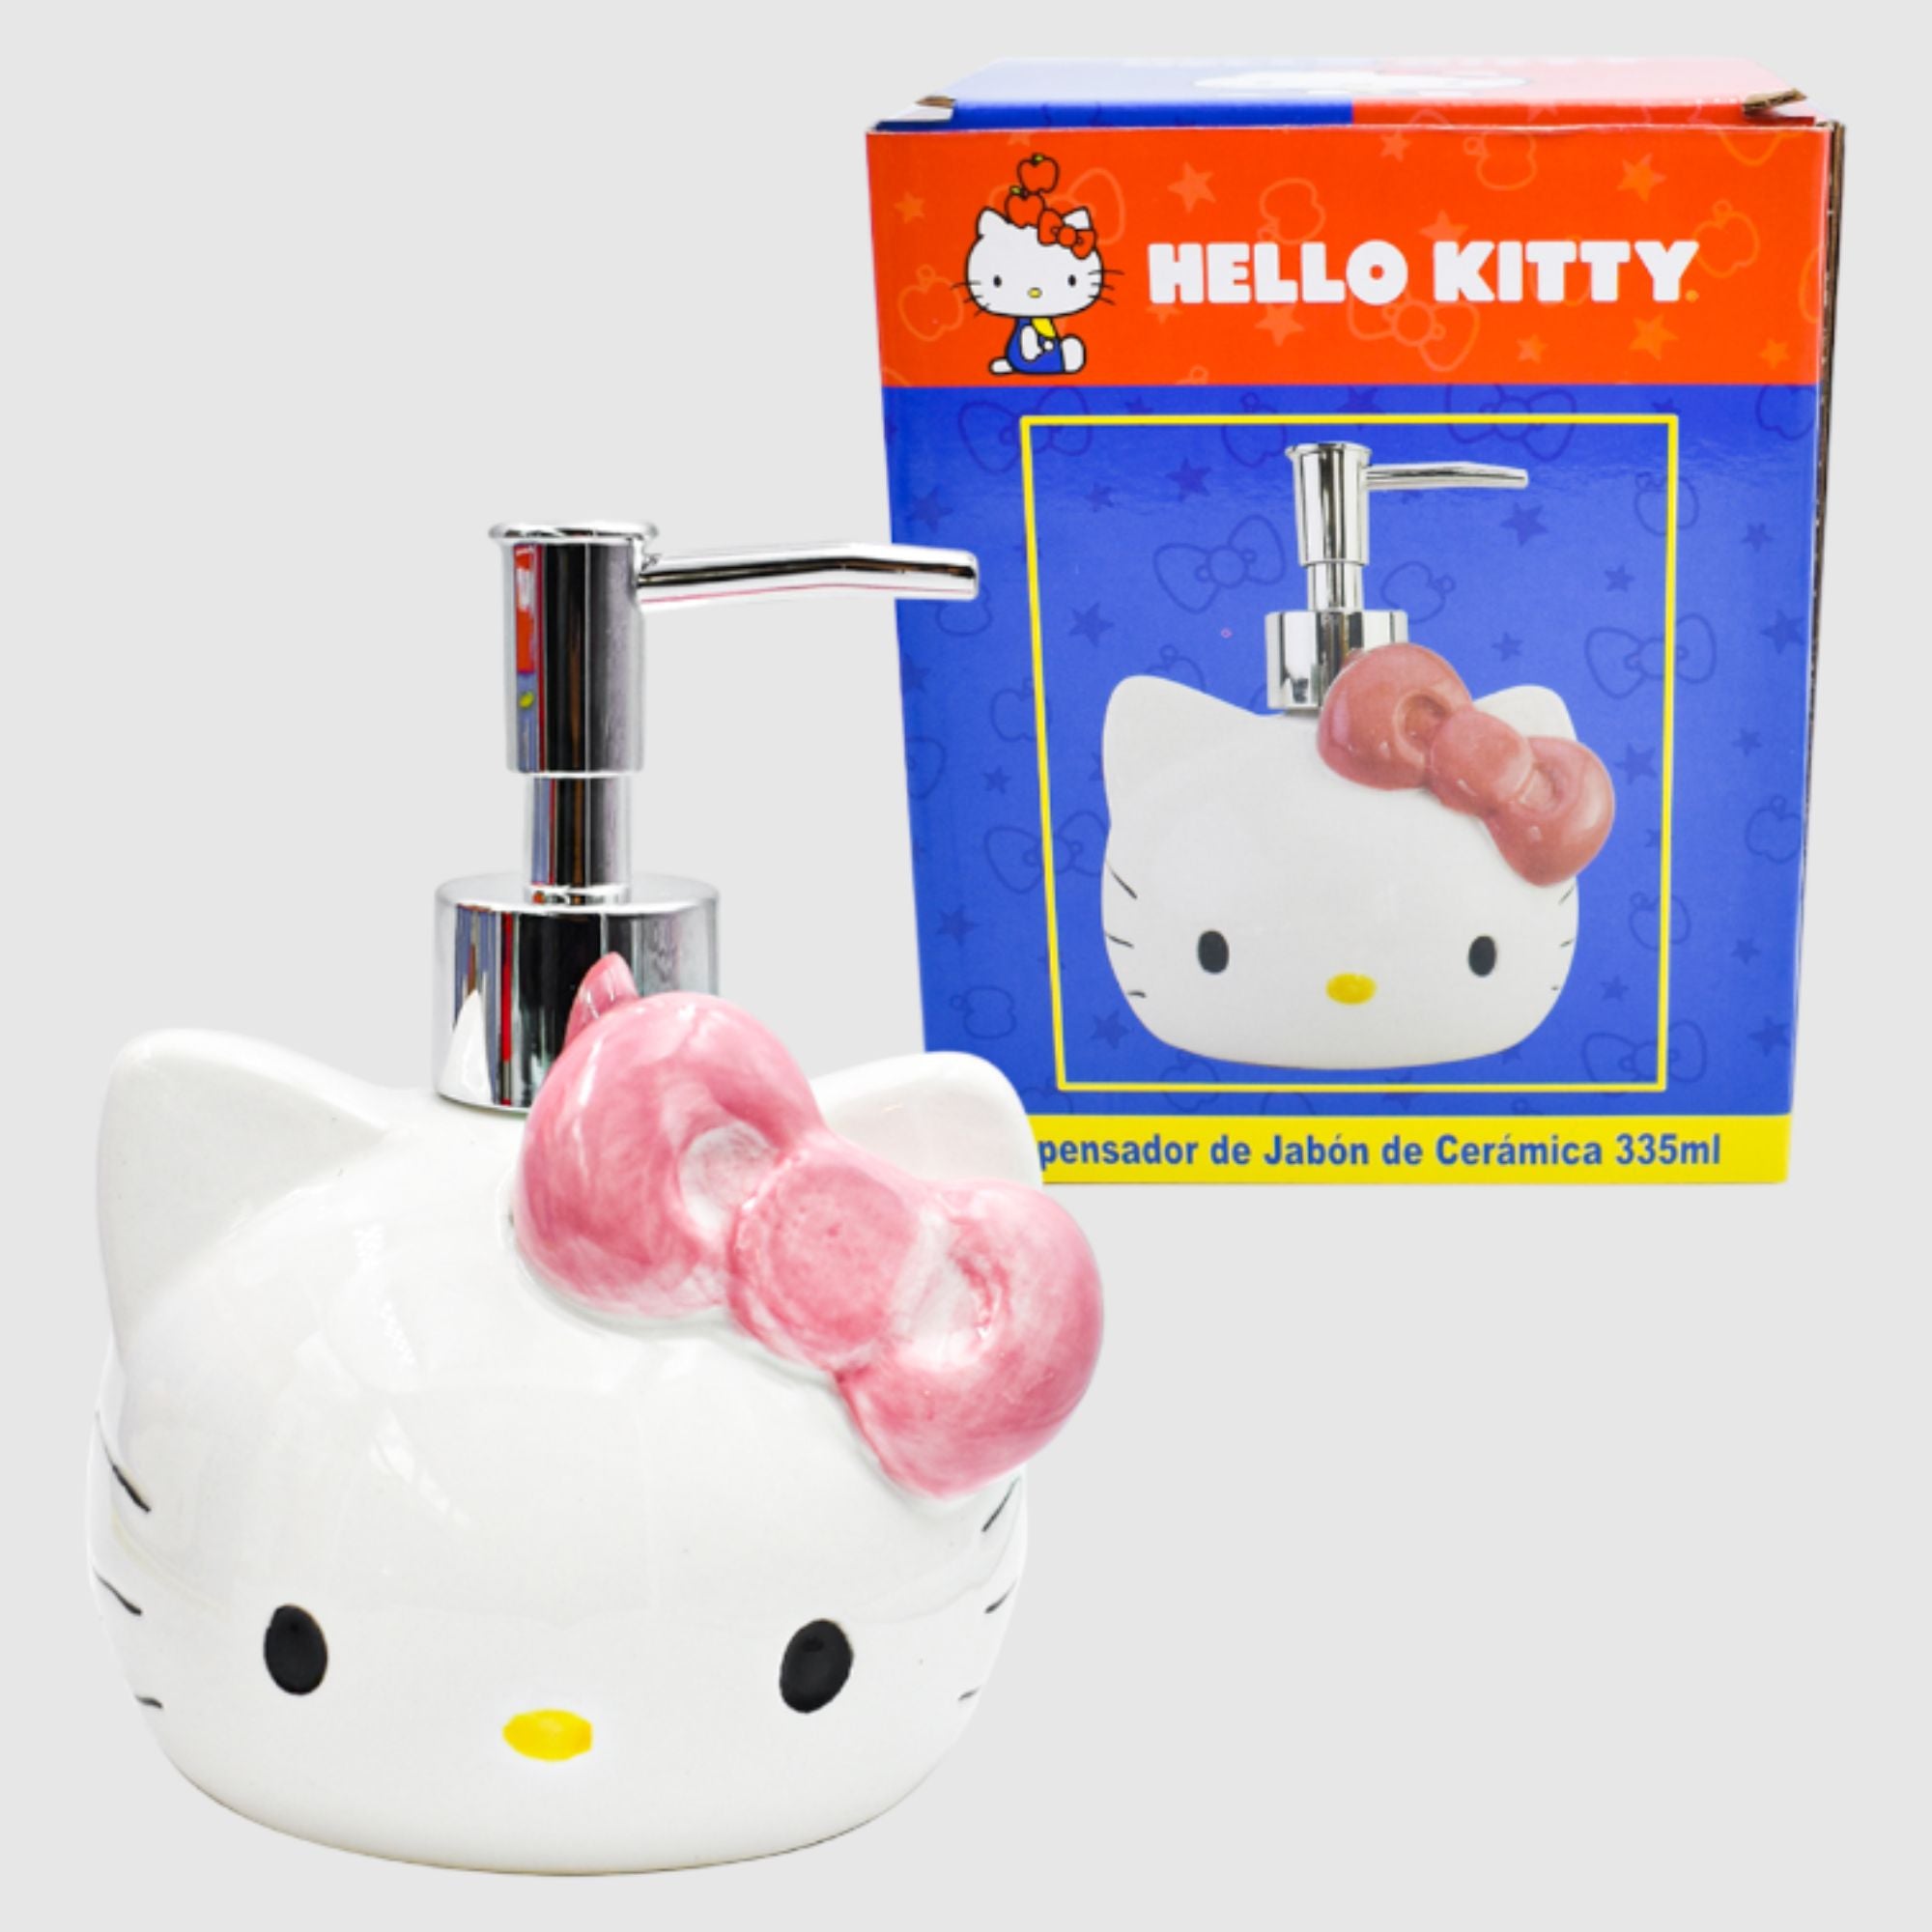 Dispensador Despachador Jabonera Crema Gel Antibacterial Fun kids Sanrio Hello Kitty Ceramica 335ml